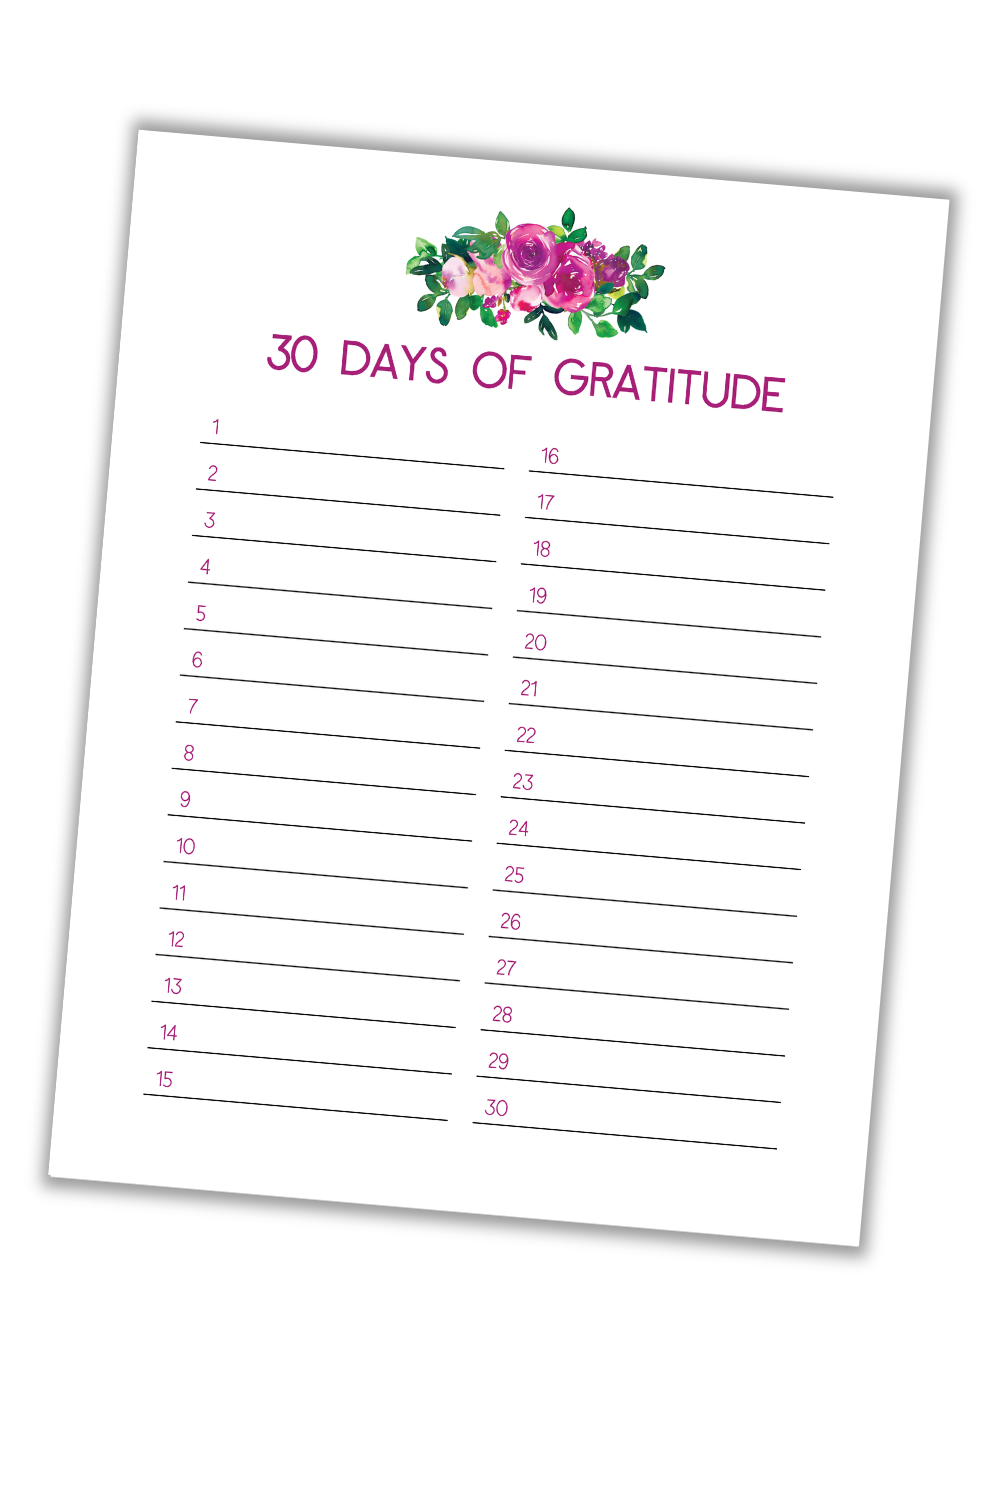 30 Days of Gratitude Template 